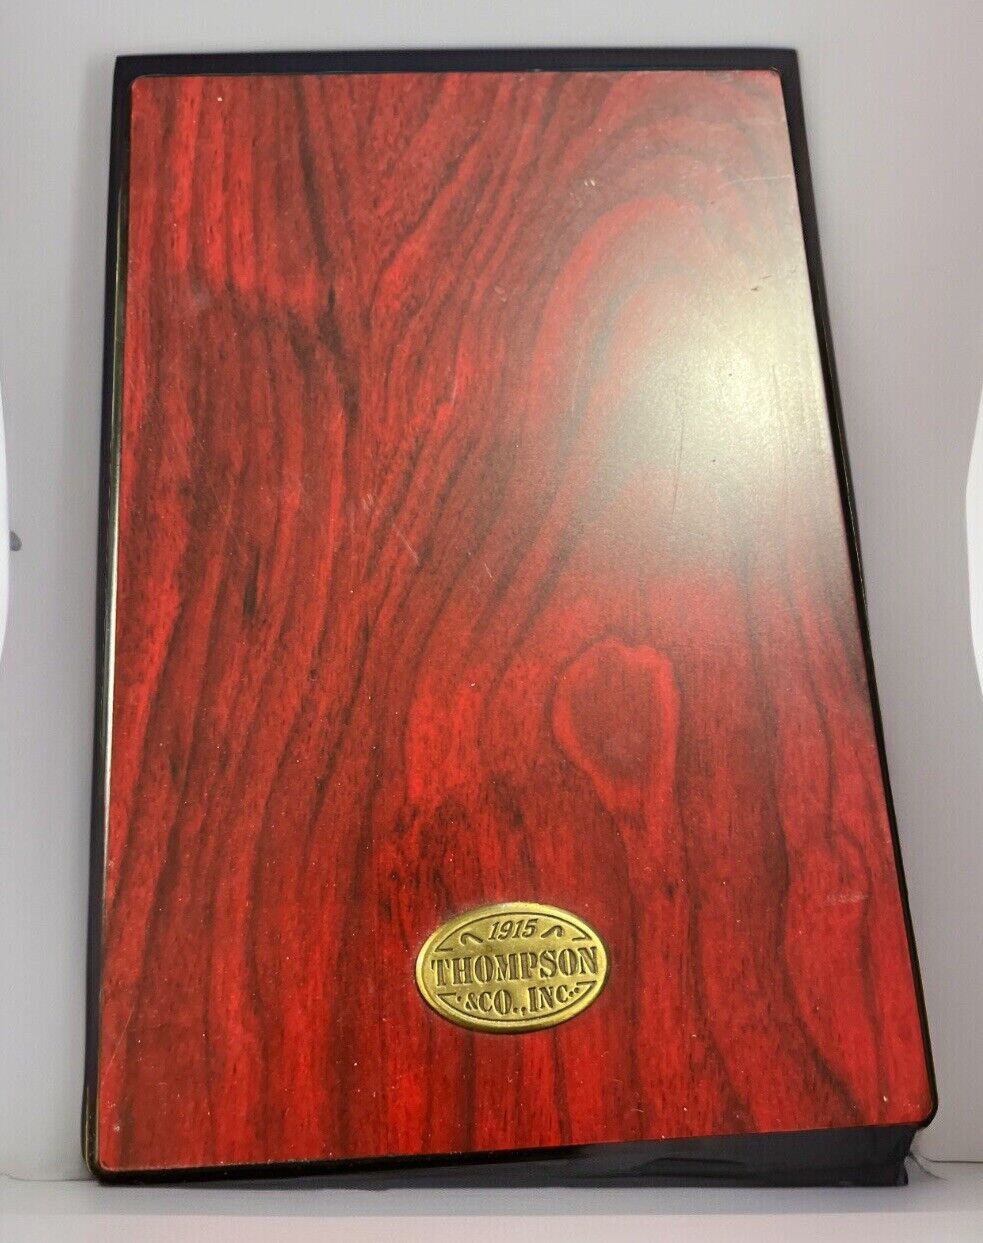 Thompson & Co., Inc. 1915 Cherry Wood Finish Cigar box